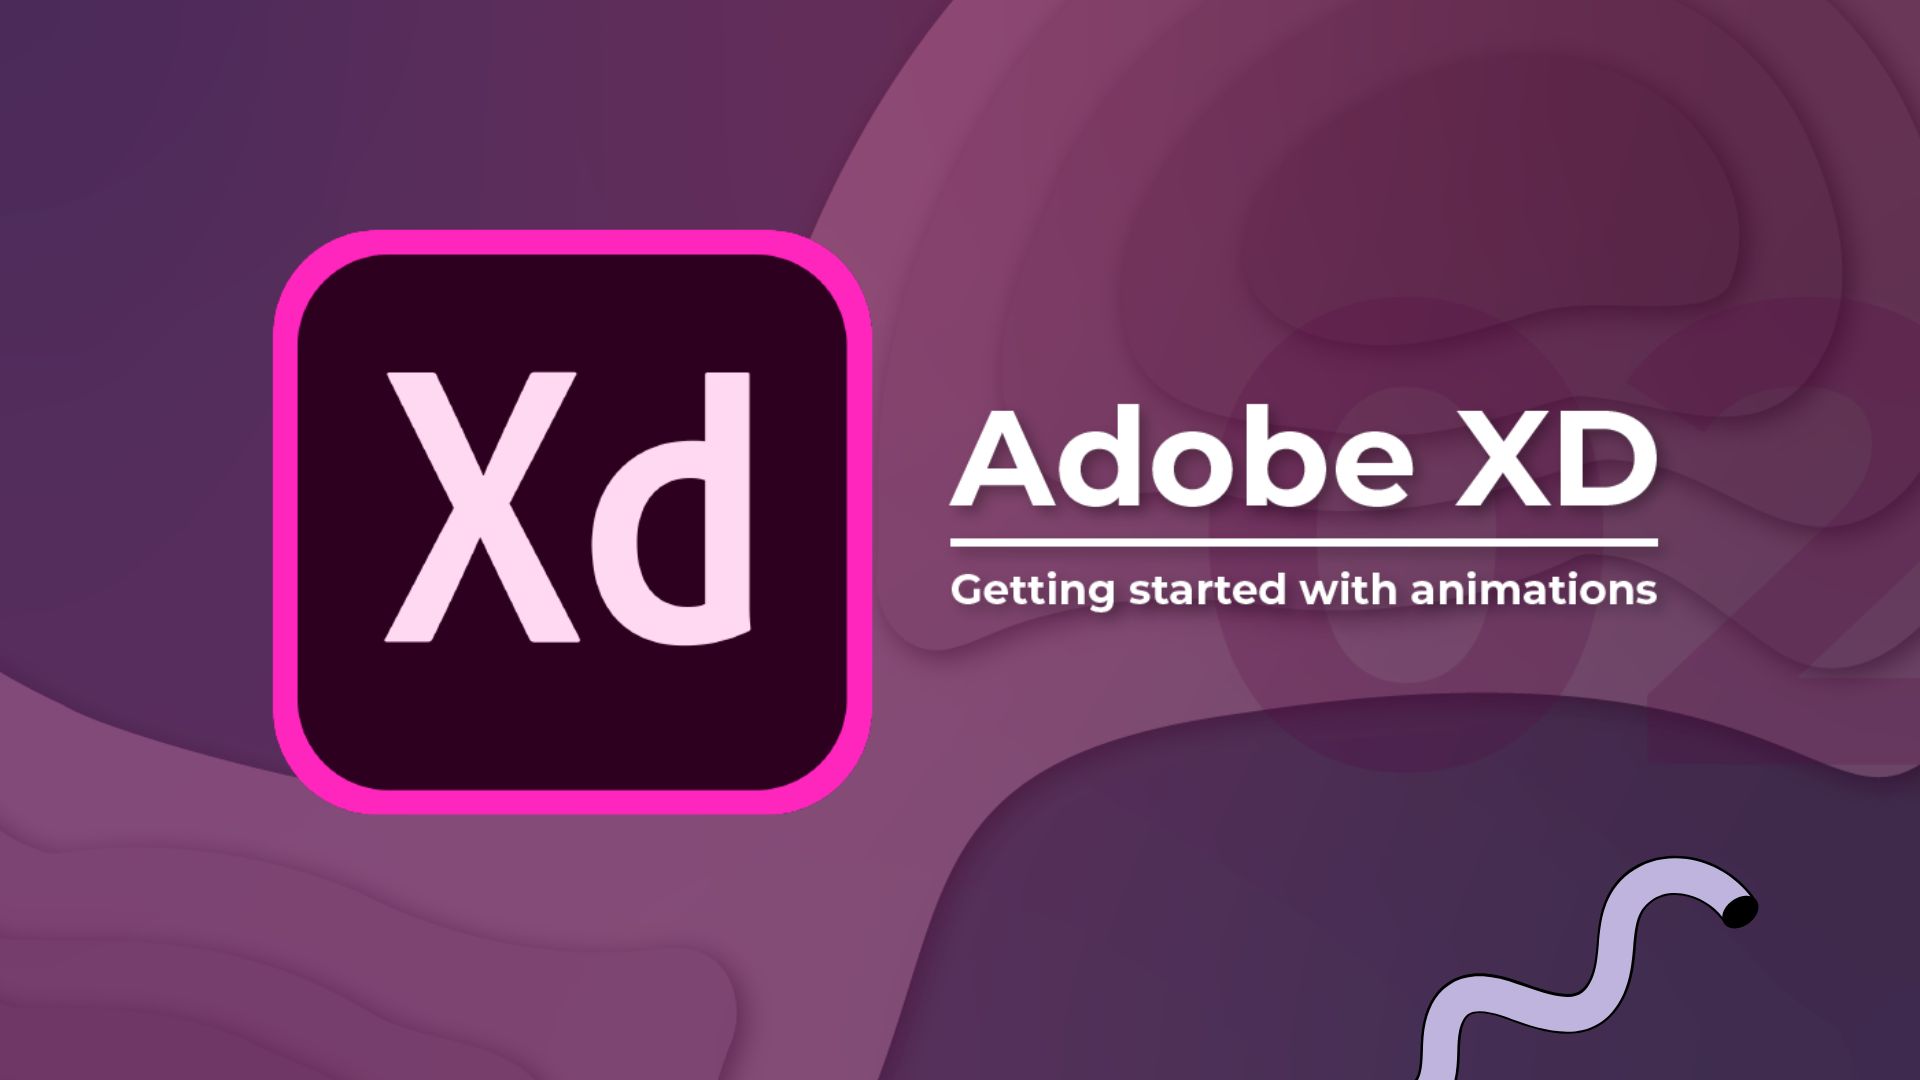 Apa itu Adobe XD? Mari kita bahas bersama!